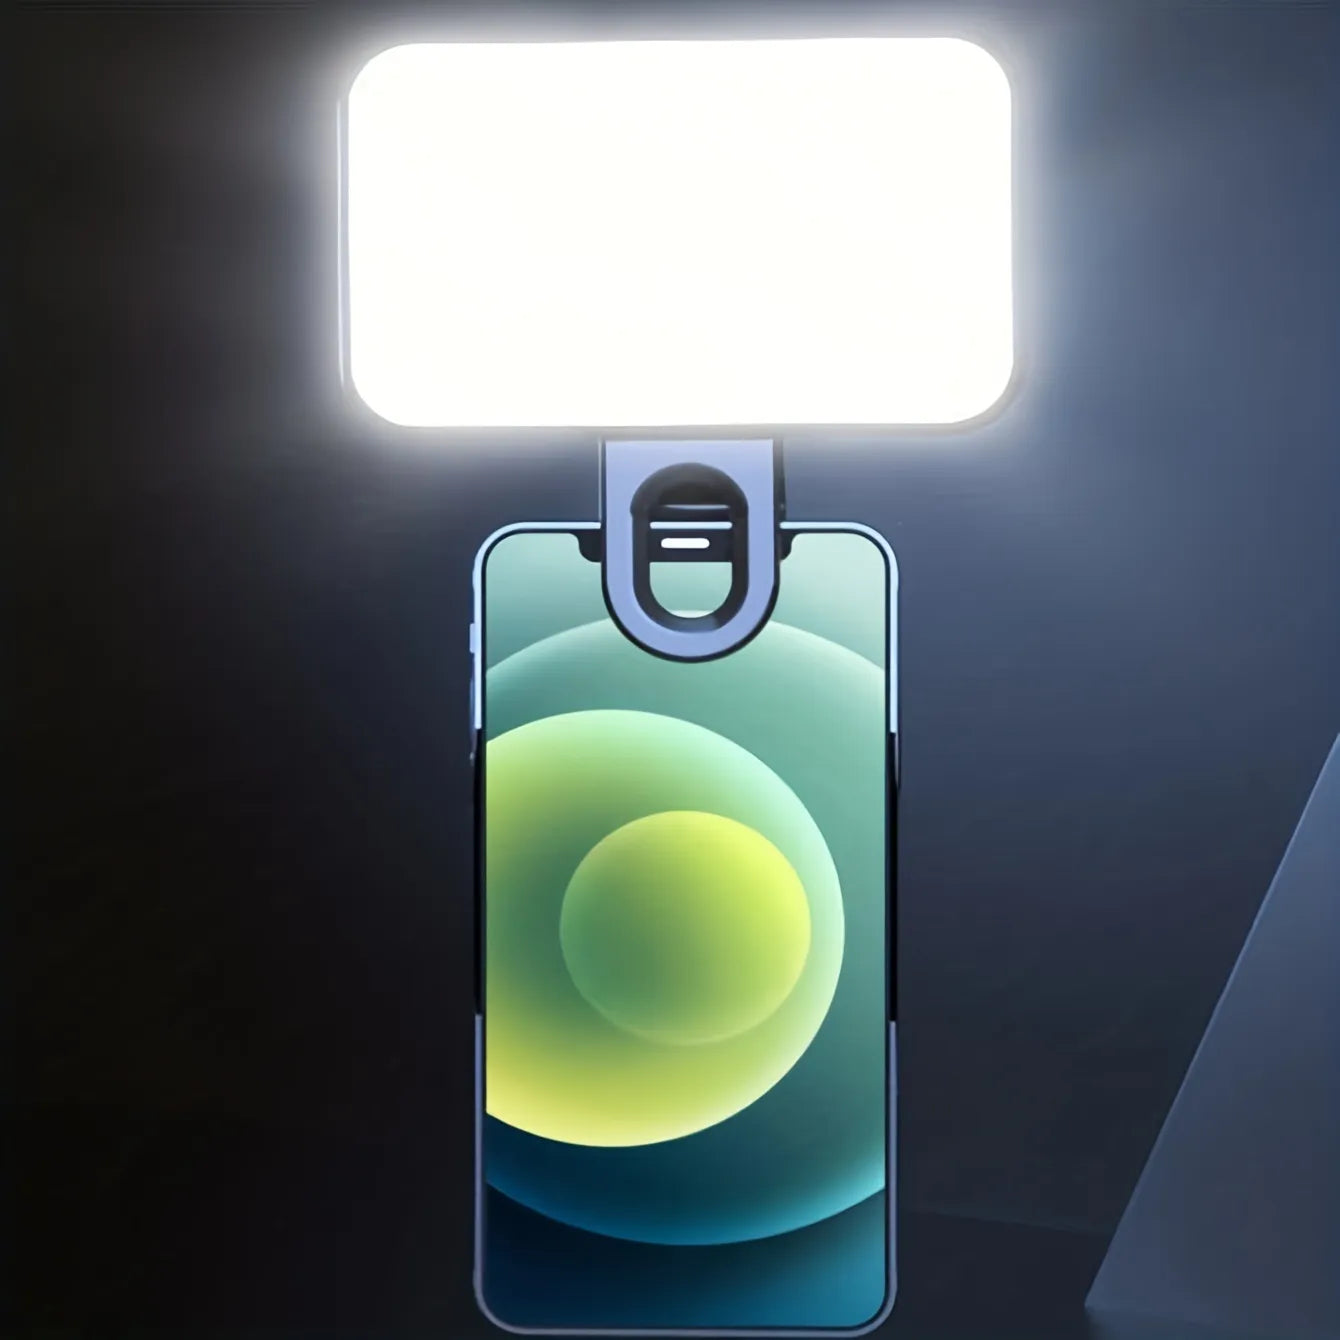 HOMY's GlowClip Mini Selfie Light